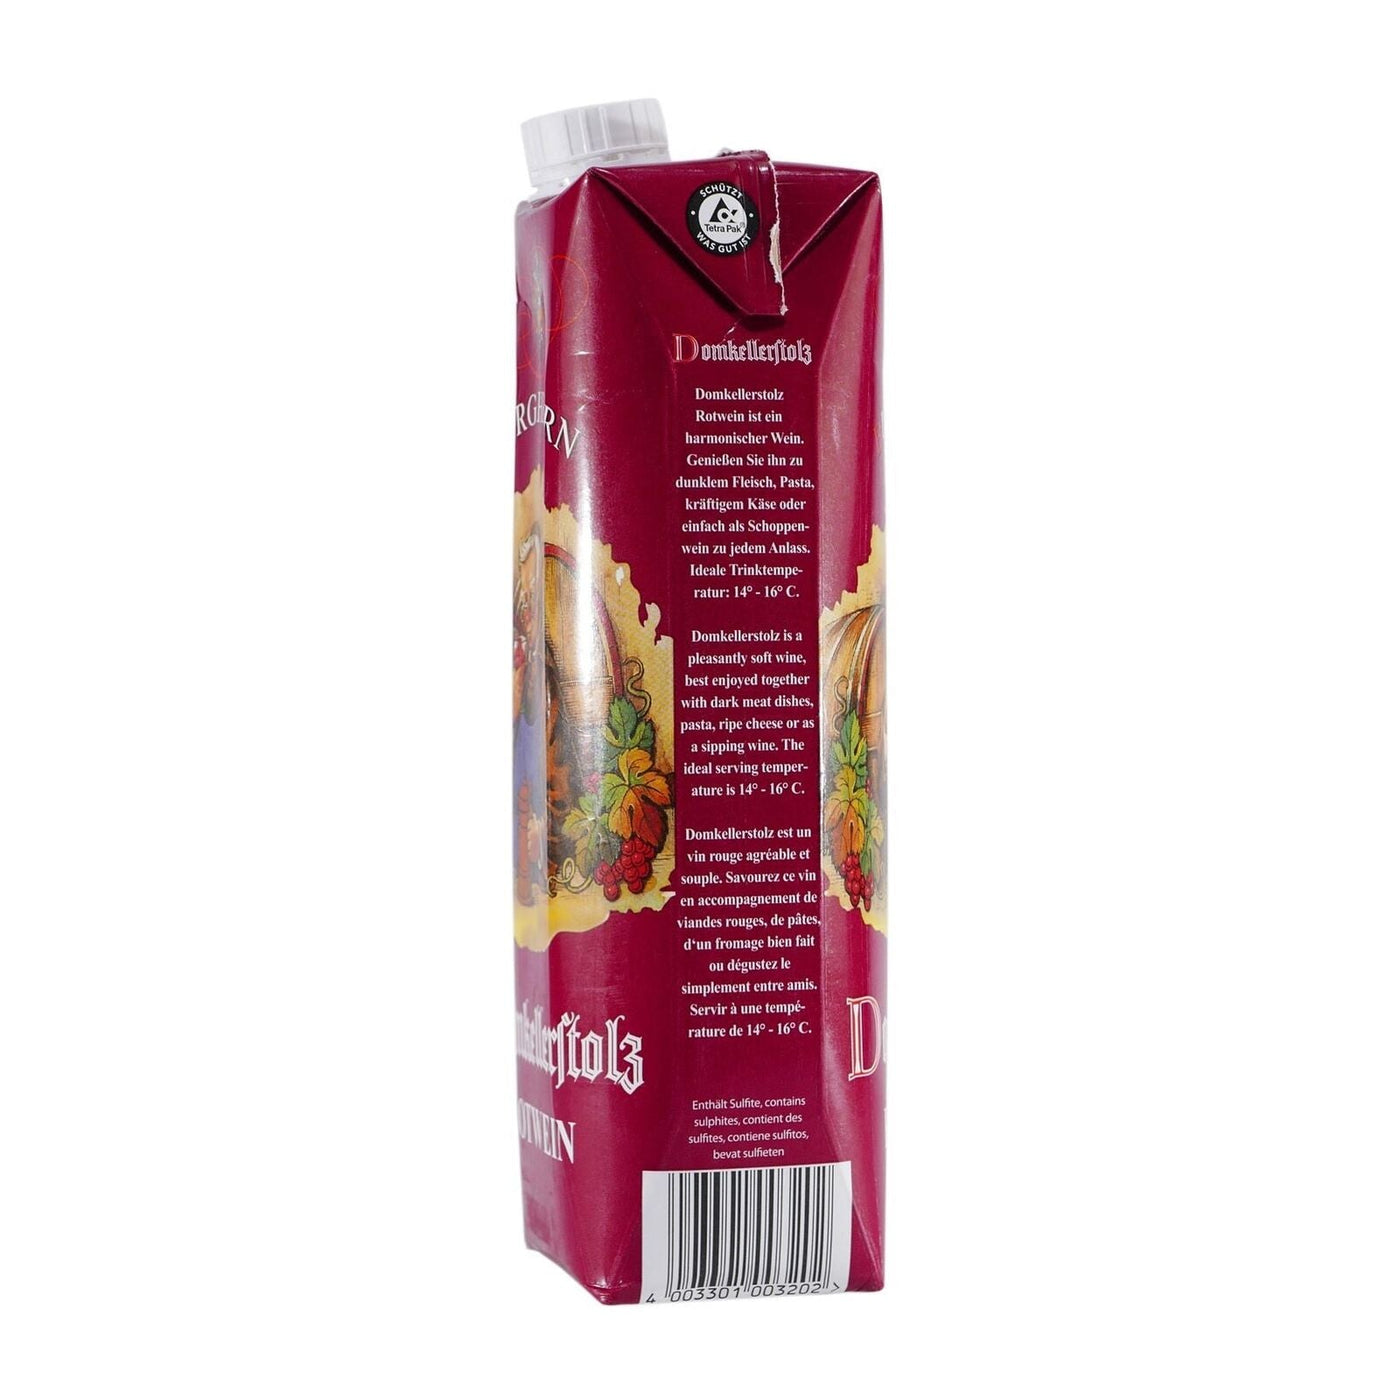 Domkellerstolz EG-Tafelwein Rot Tetrapack, 12er Pack (12 x 1 l) - Genussleben